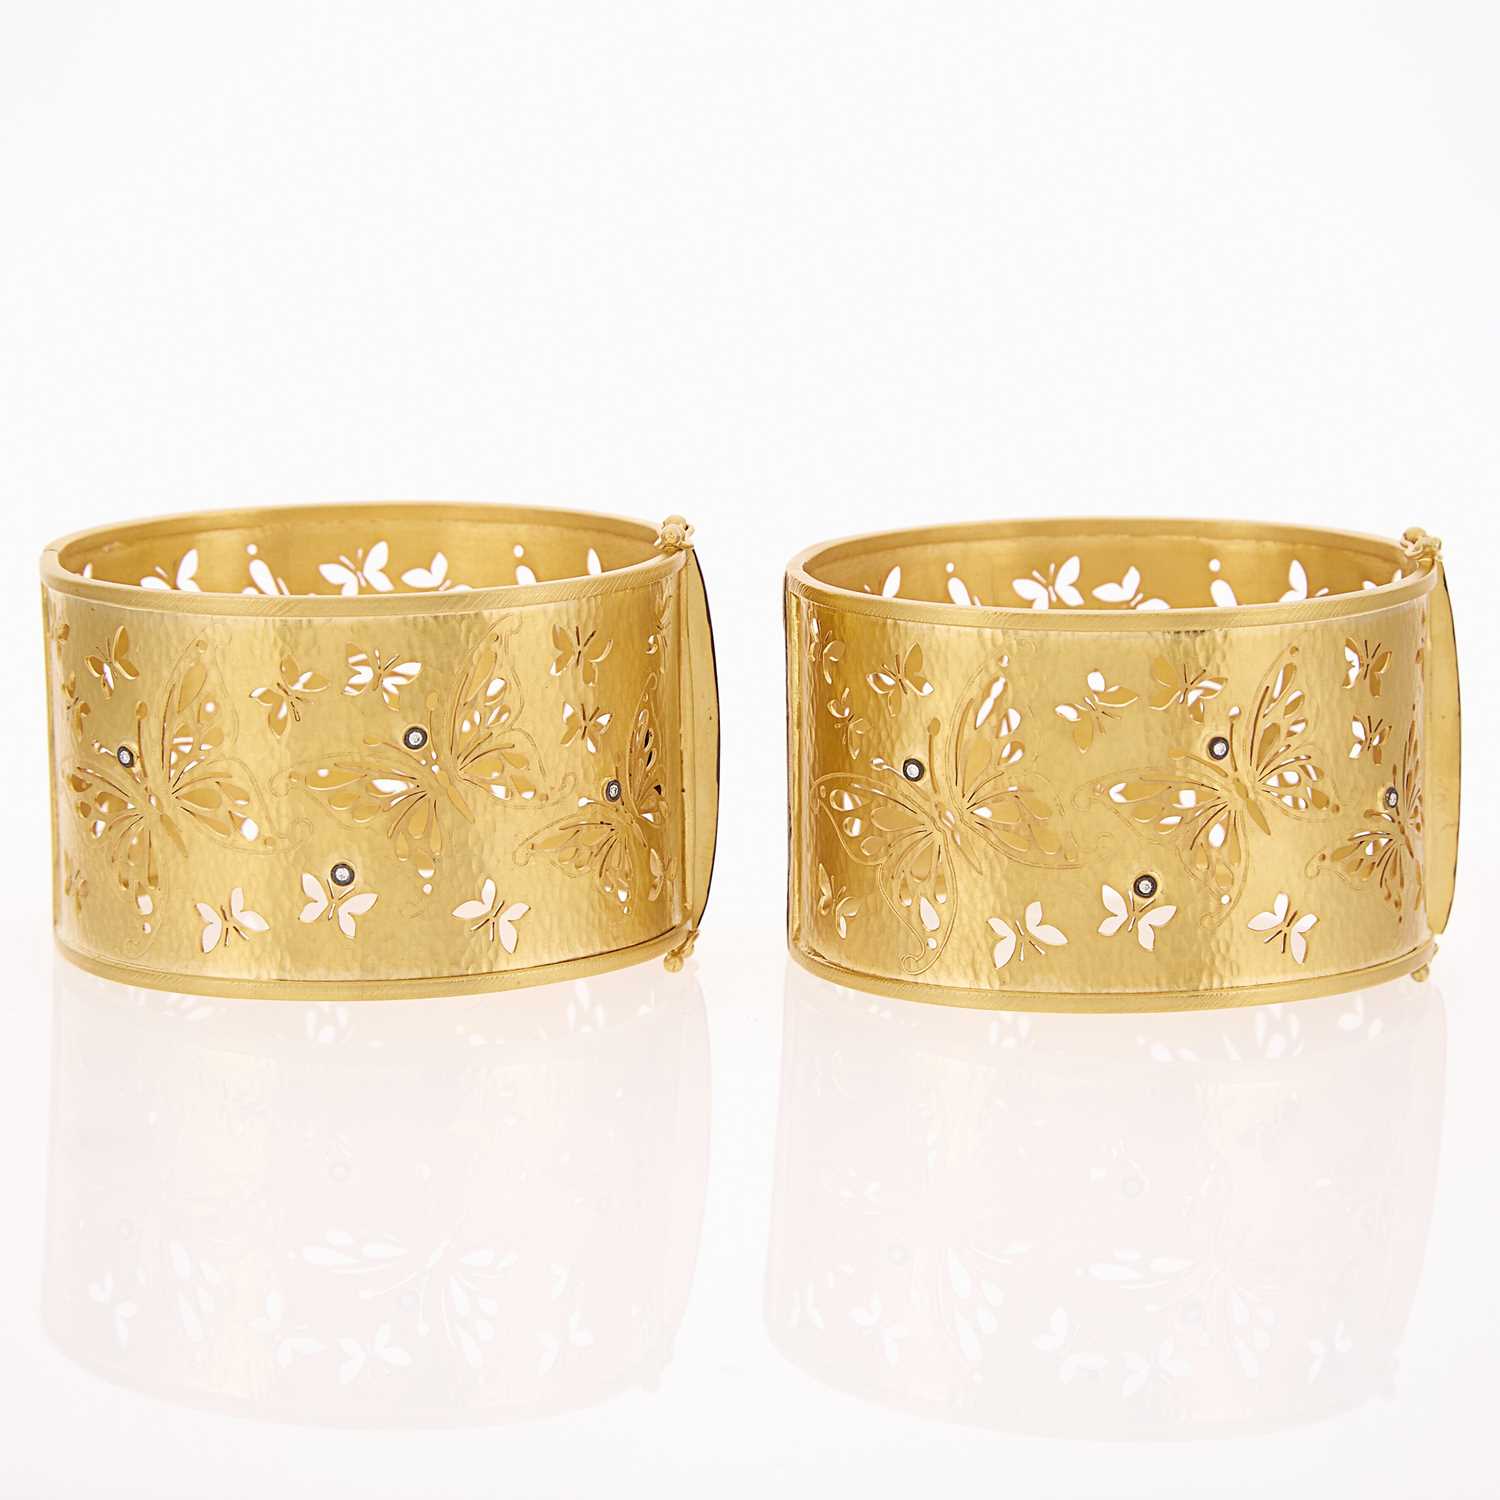 Lot 1189 - Kurtulan Pair of High Karat Wide Gold, Silver and Diamond Cuff Bracelets